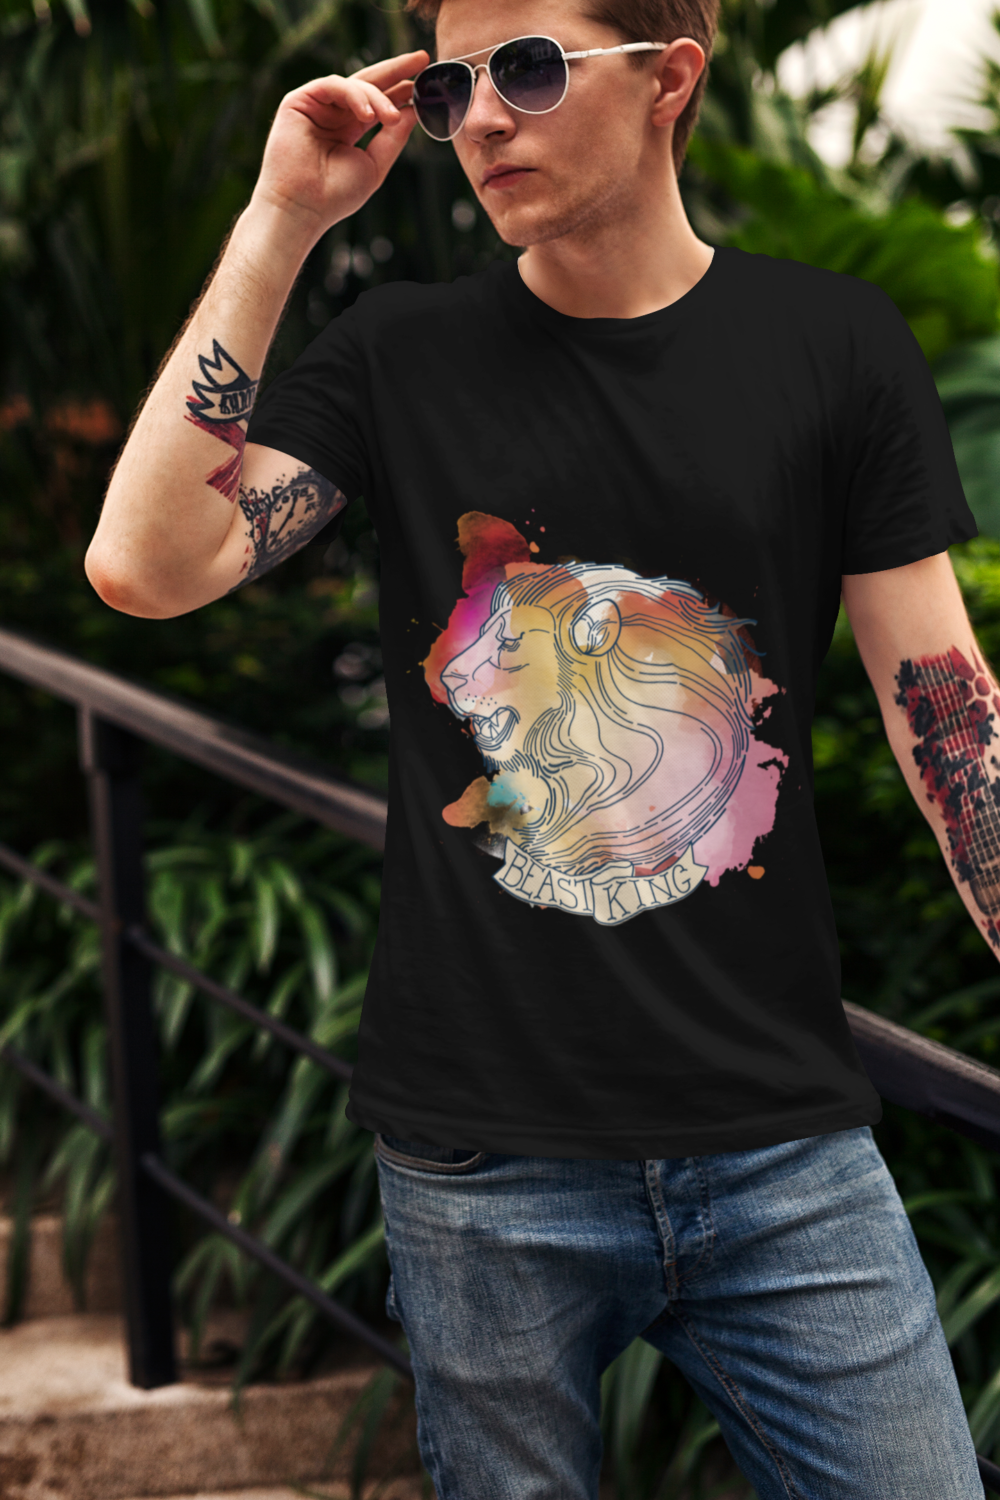 t shirt mockup featuring a stylish man with tattoos 2197 el1 2